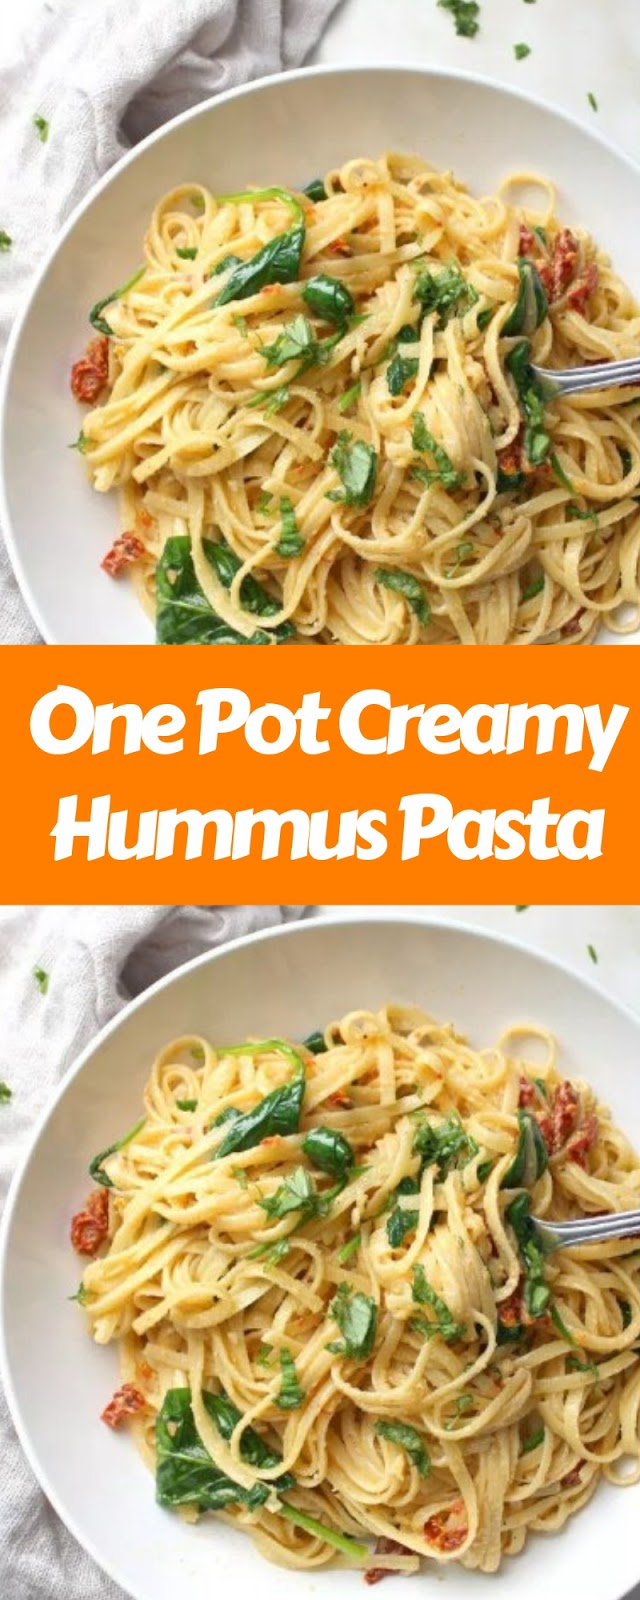 One Pot Creamy Hummus Pasta